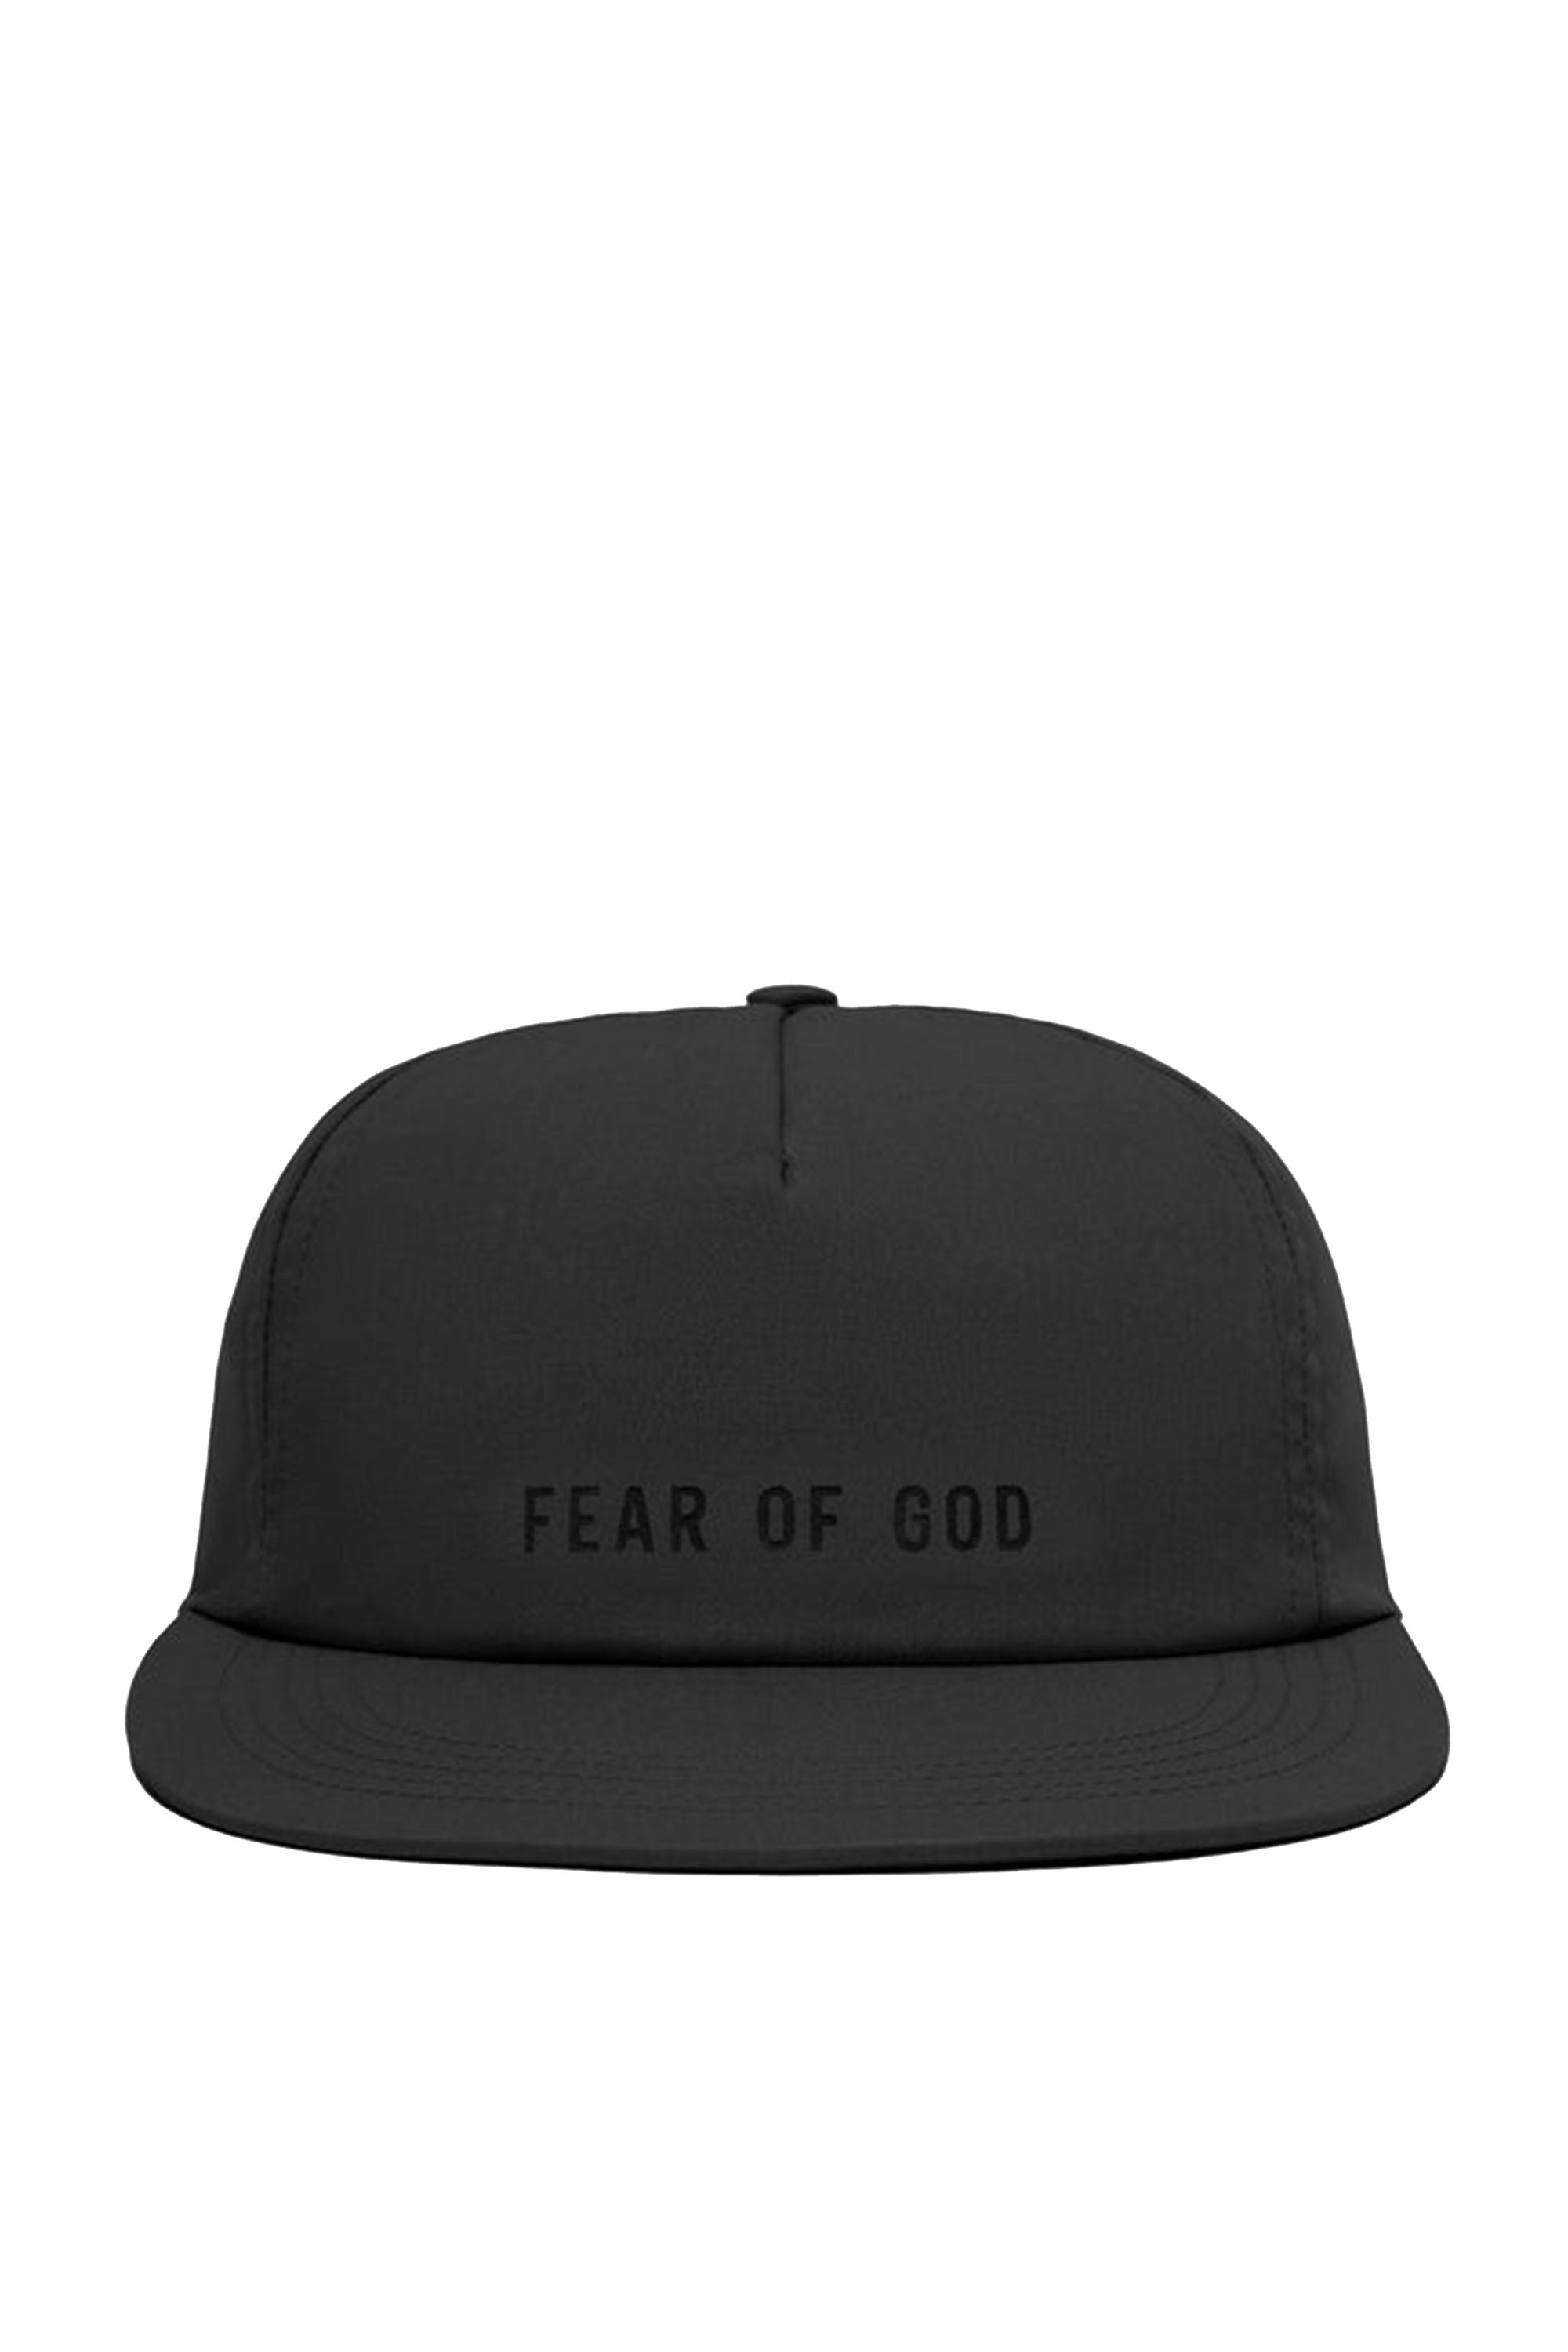 Fear of God 5 PANEL HAT BLK